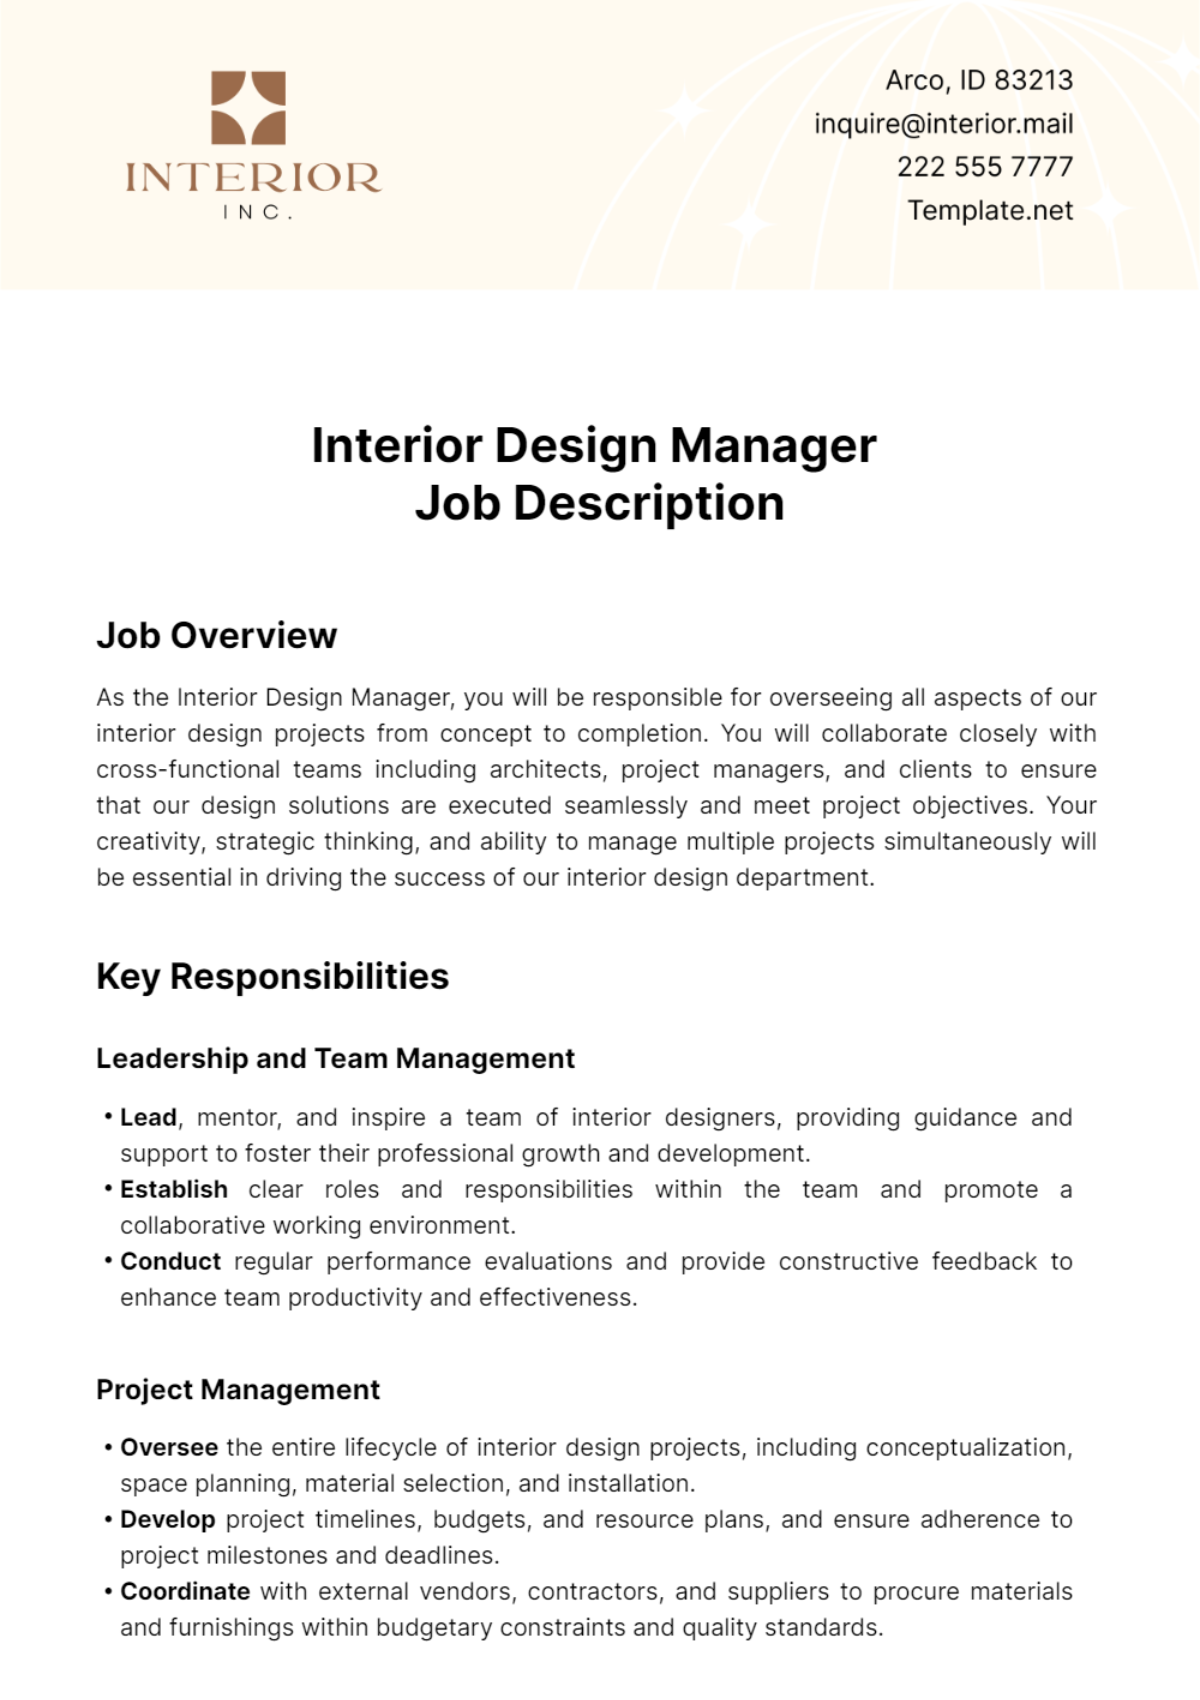 Interior Design Manager Job Description Template